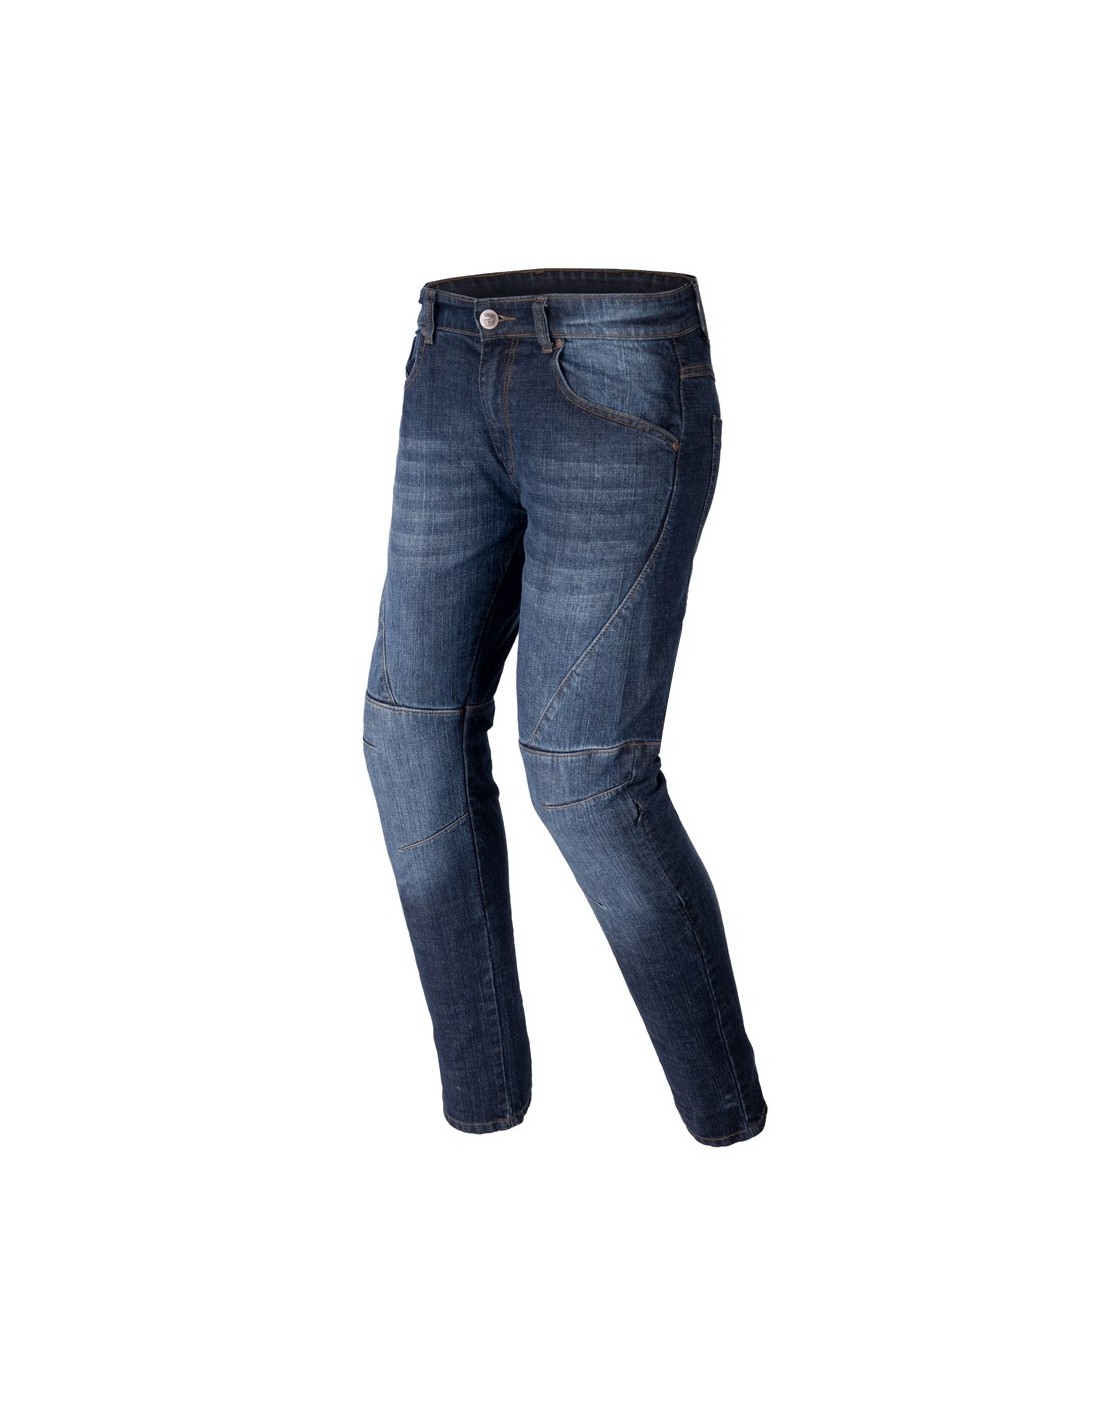 Bela Rocker Jeans Moto per Uomo - Blu Scuro